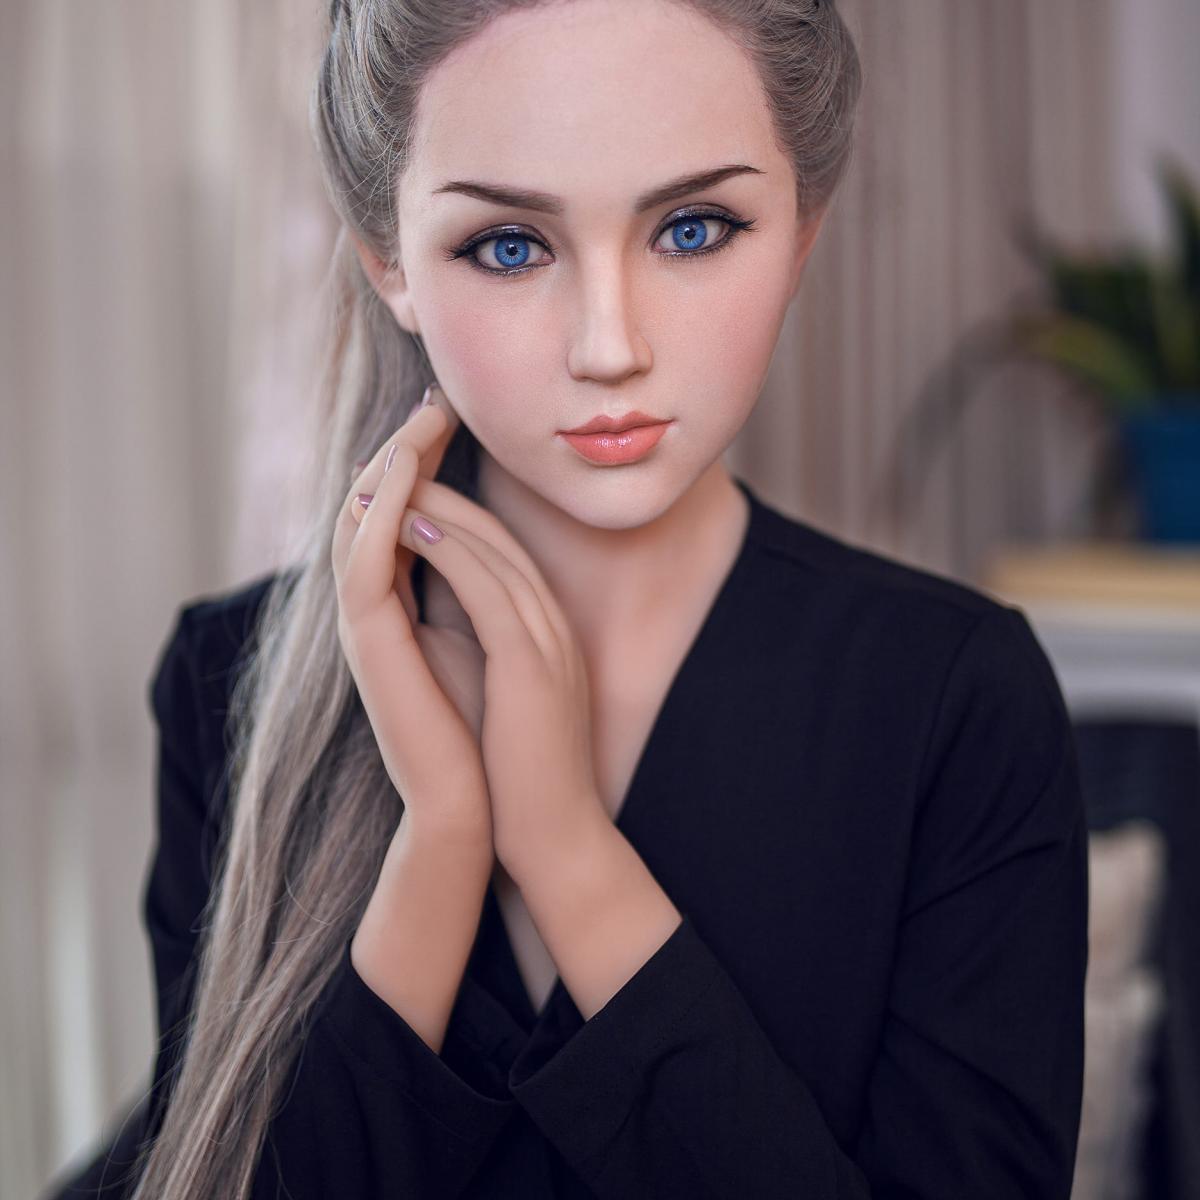 XYDoll - Misa - Silicone TPE Hybrid Sex Doll - 170cm - Implanted Hair & Gel Breast - Natural